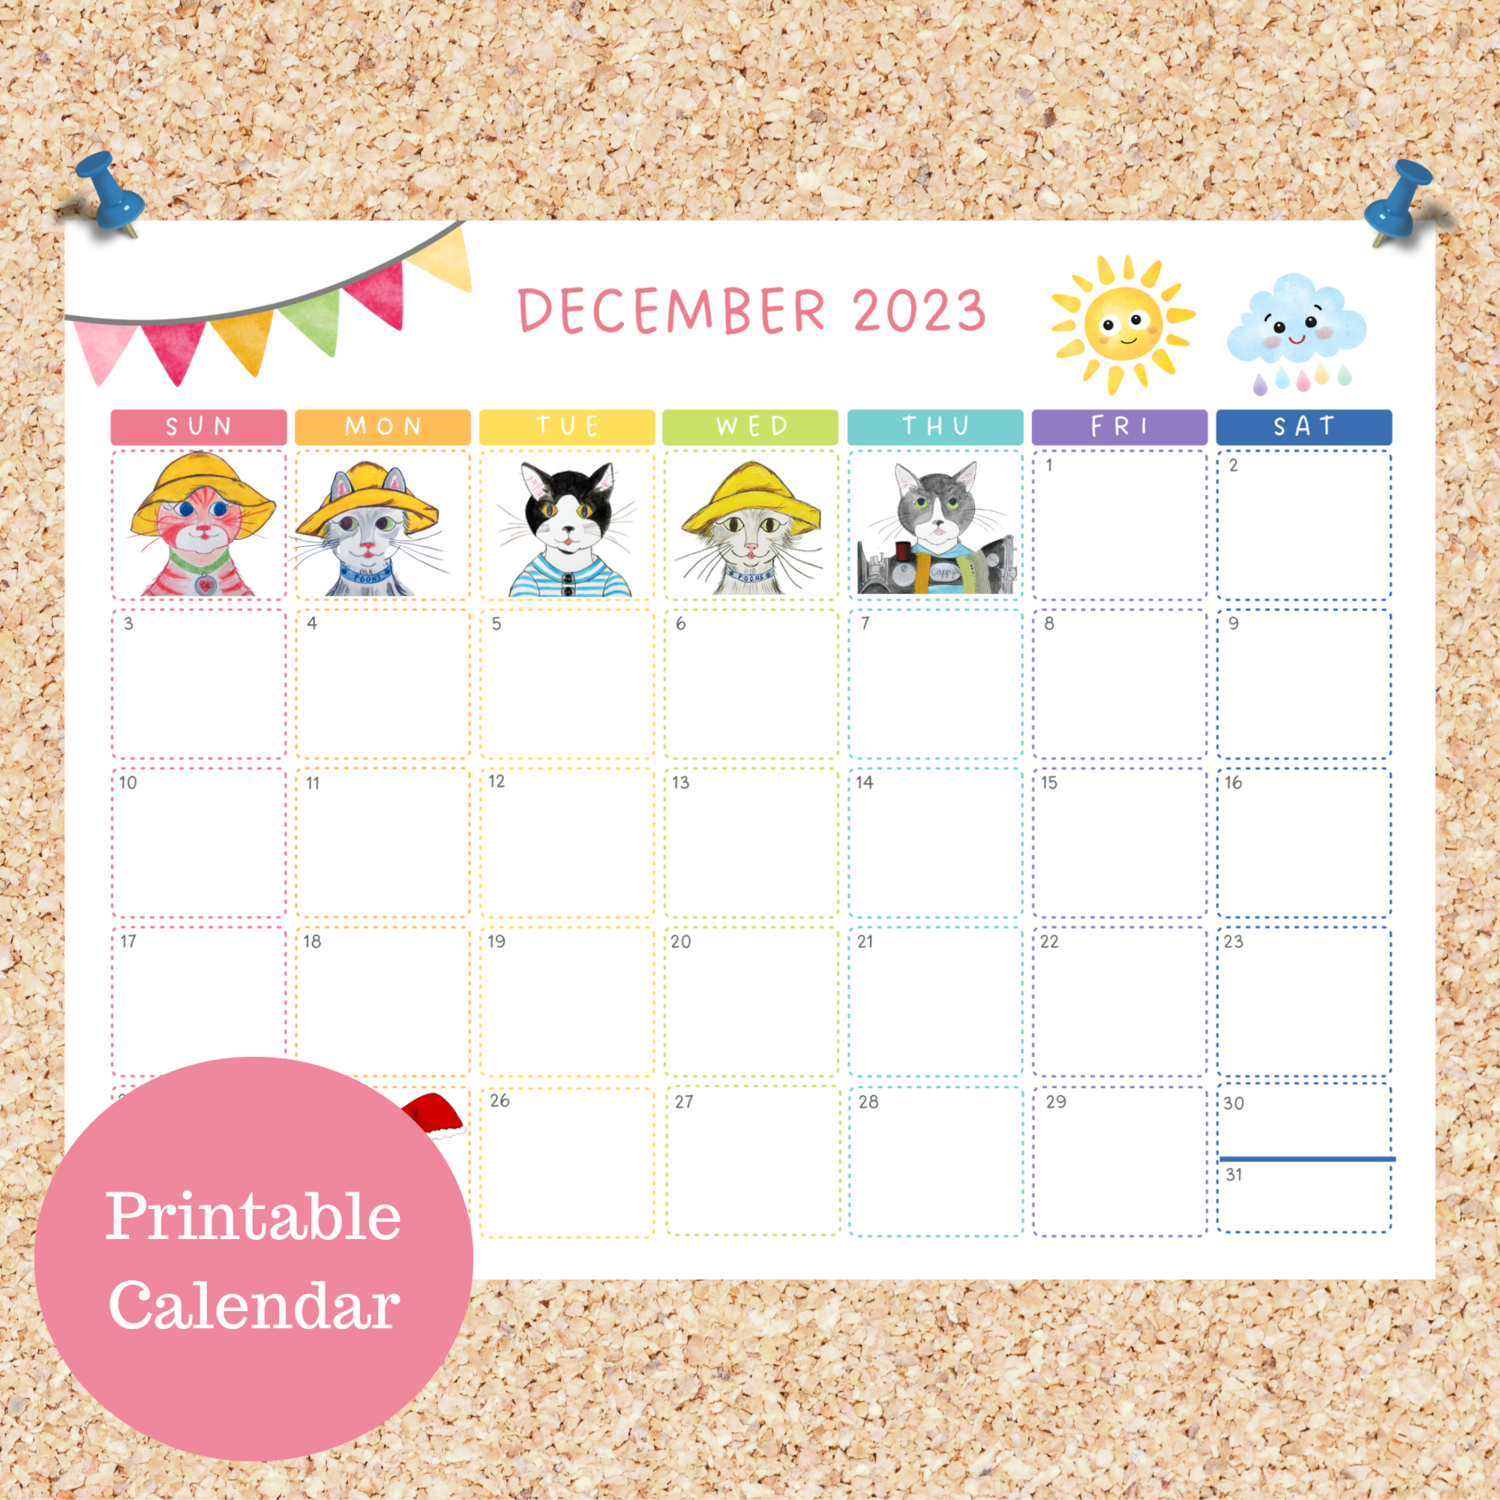 Oli Kids Co December 2023 Printable Calendar, Downloadable Calendar, Cat Calendar, Instant Download, Print at Home